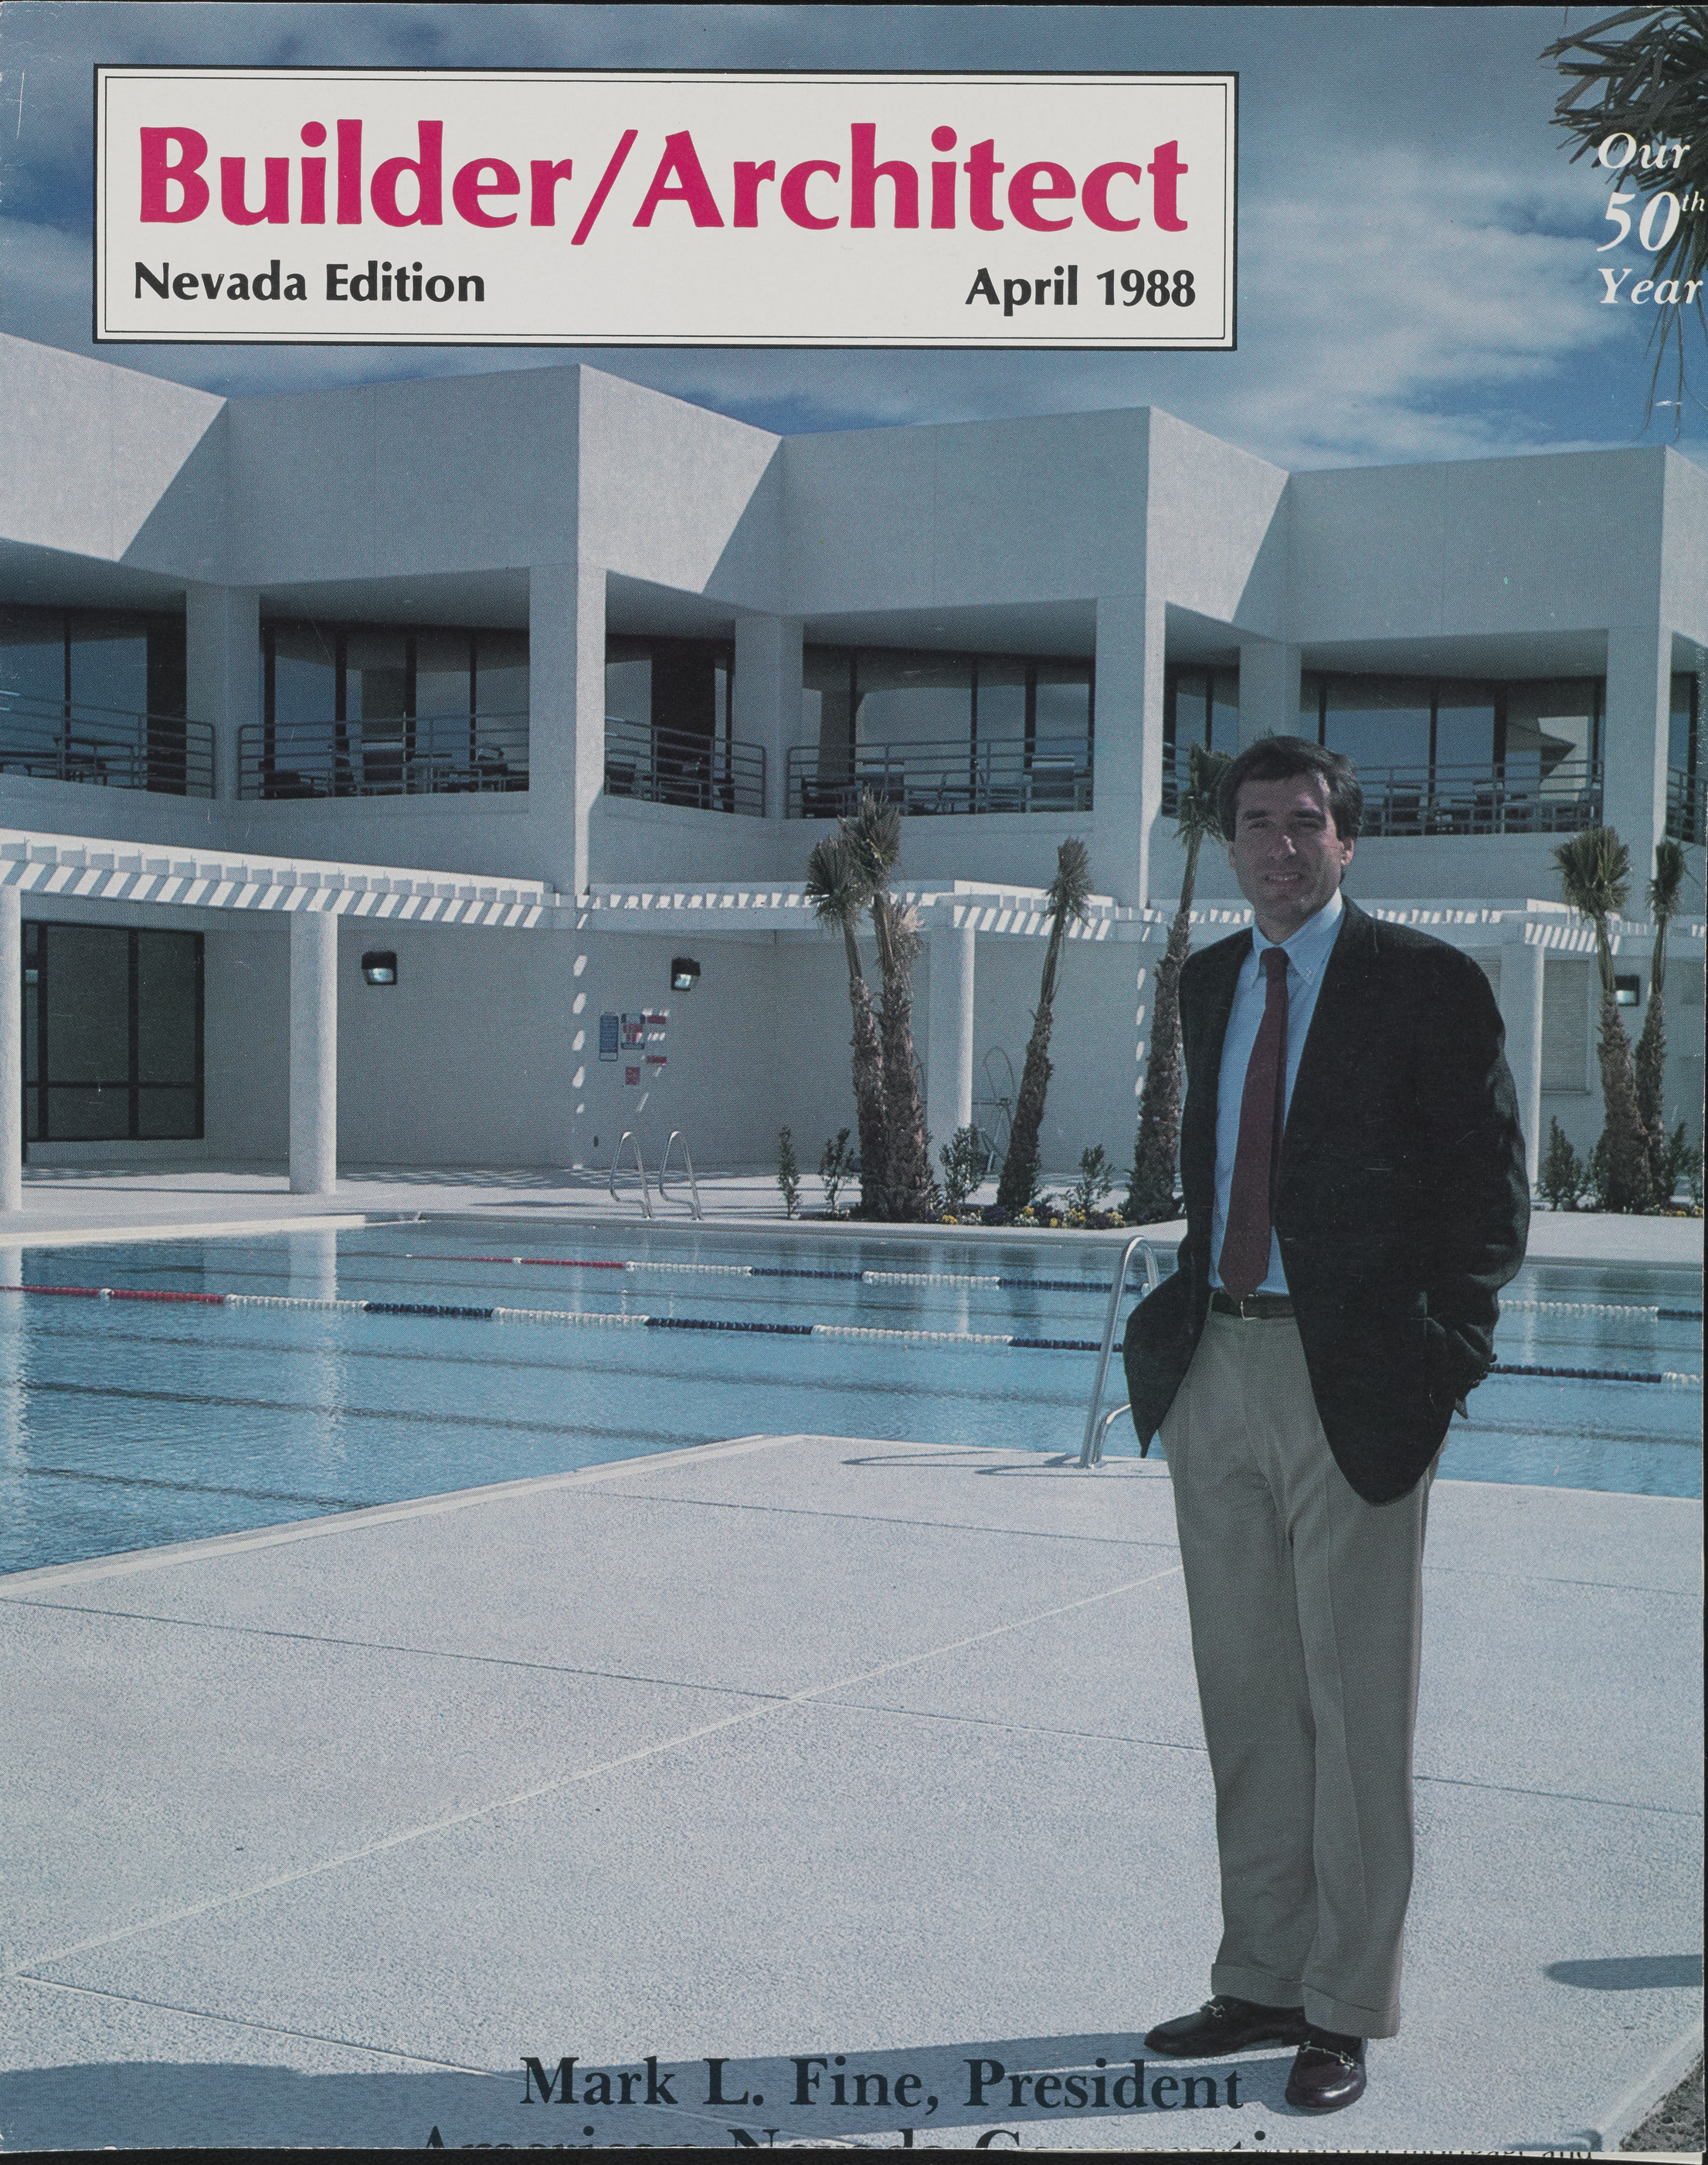 Builder/Architect magazine, Nevada Edition with Mark Fine, April 1988, cover